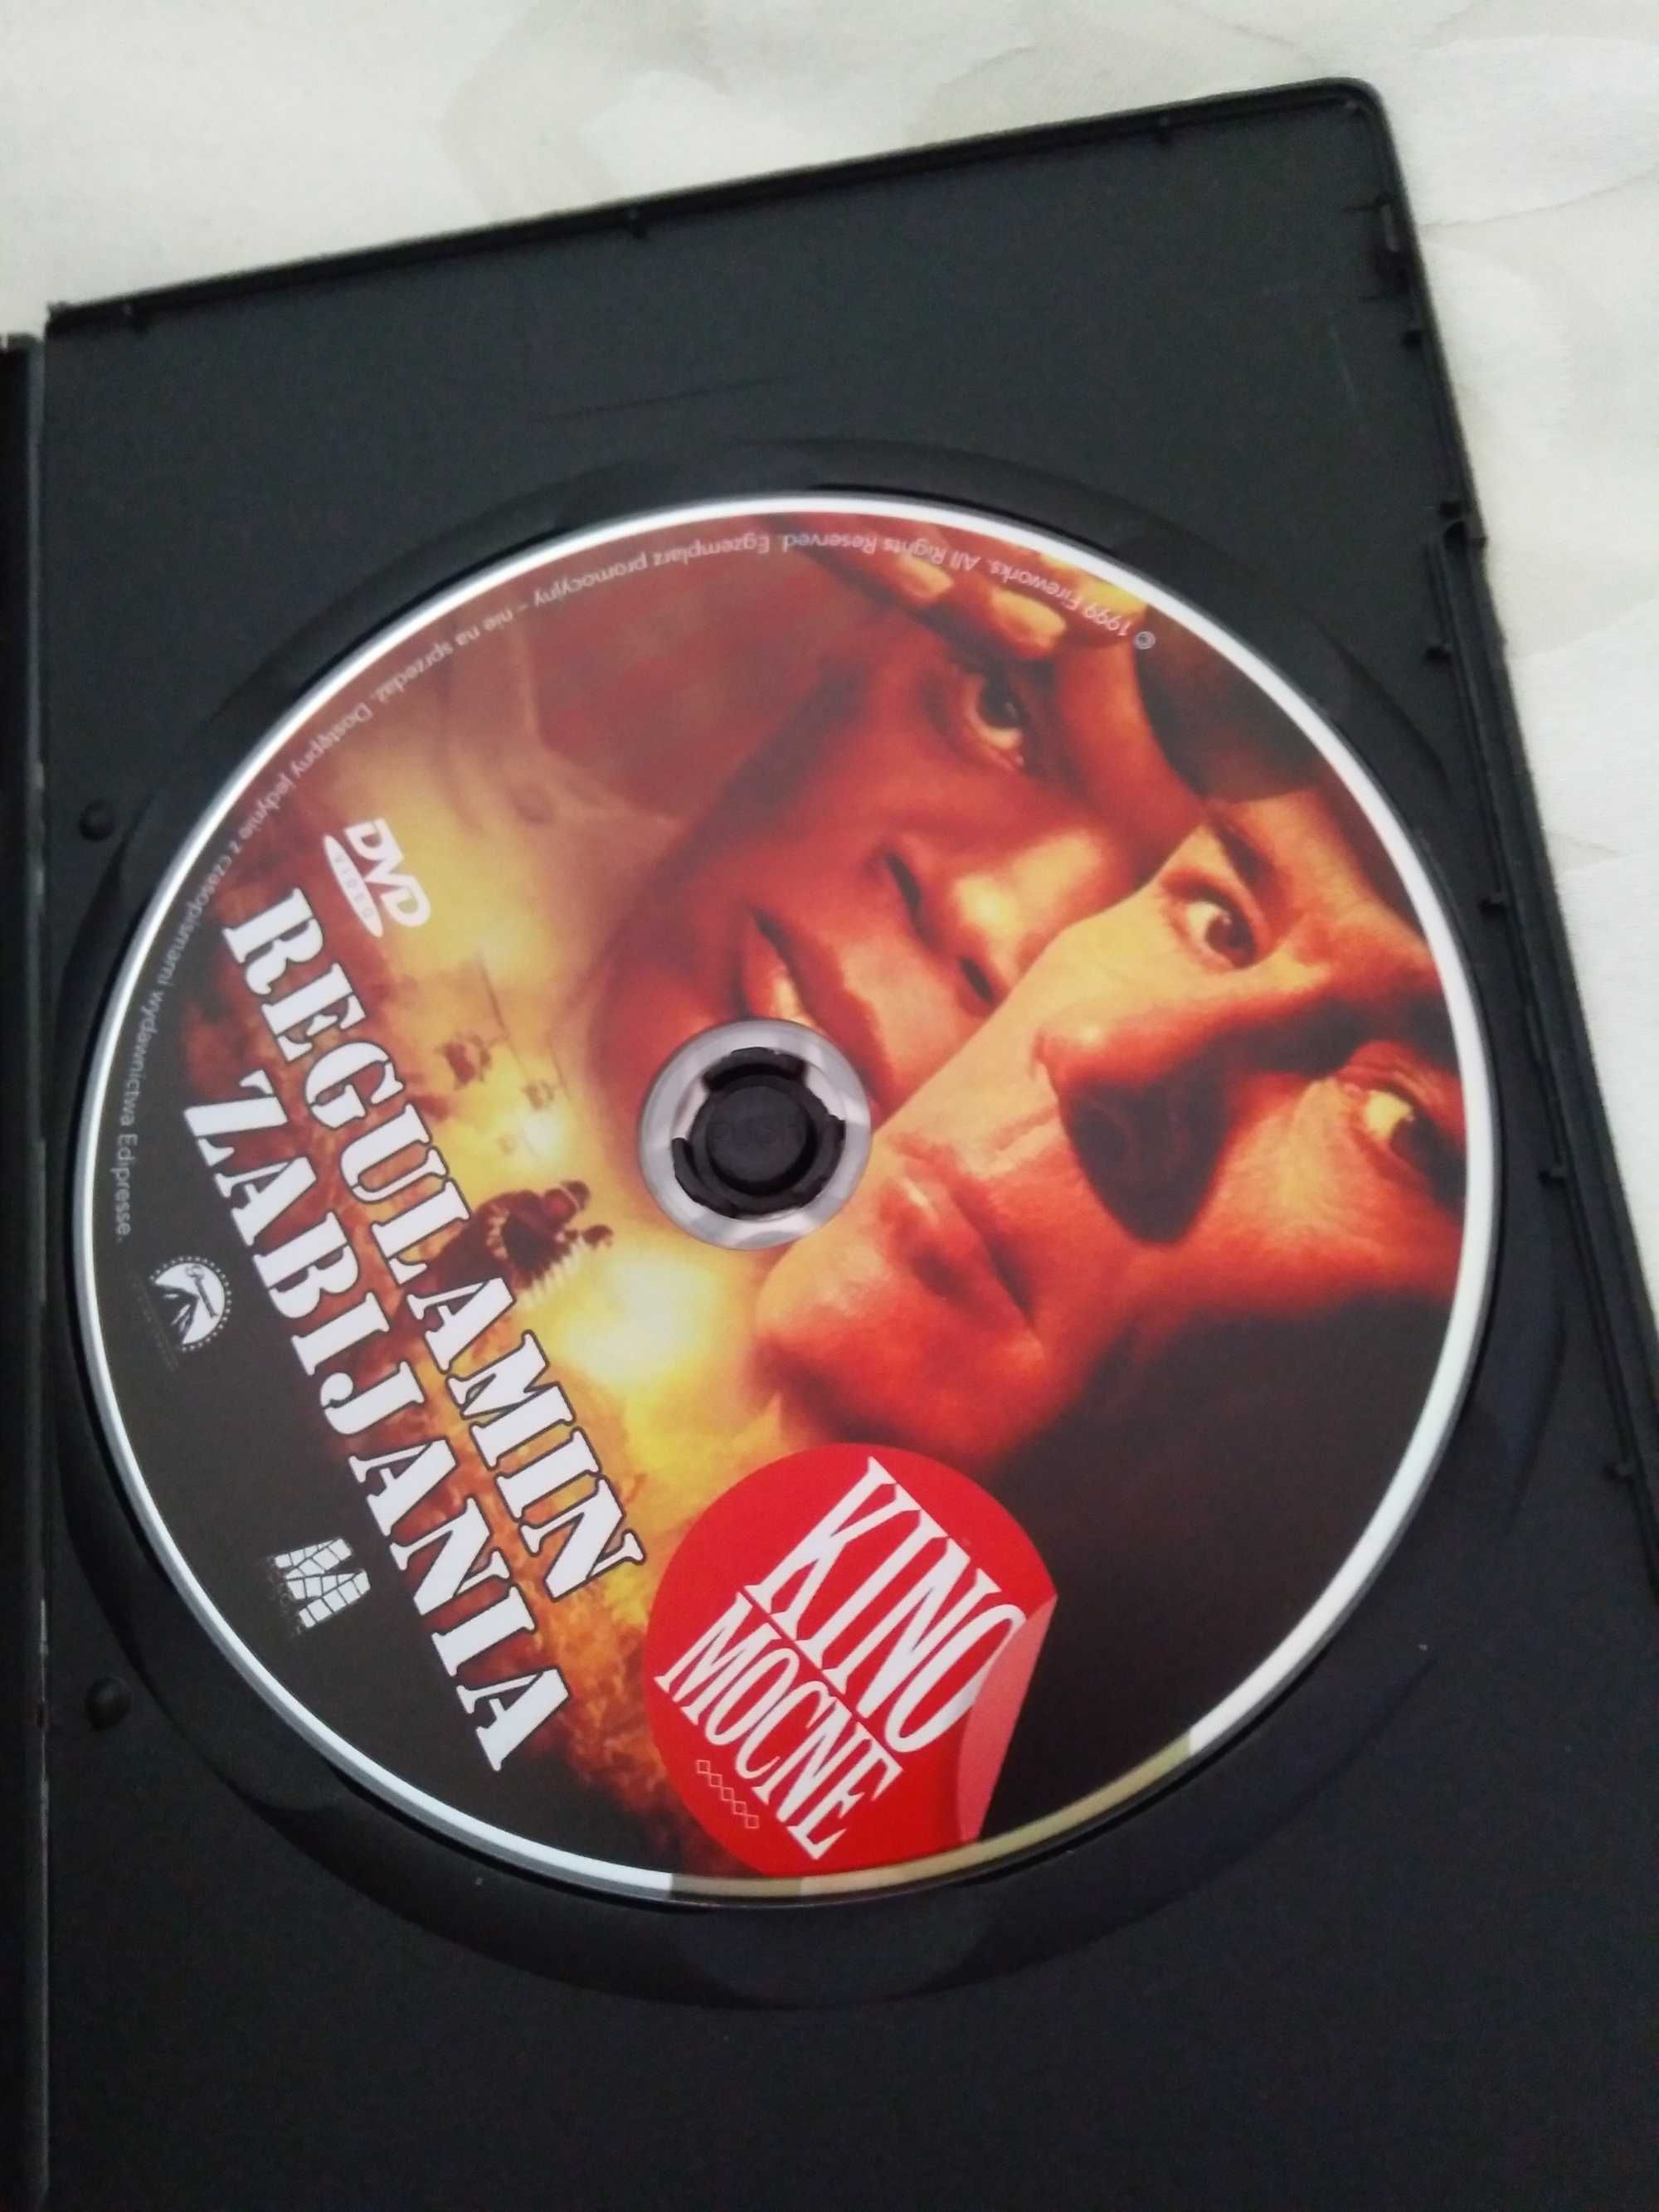 Regulamin zabijania Tommy Lee Jones mocne kino płyta DVD film